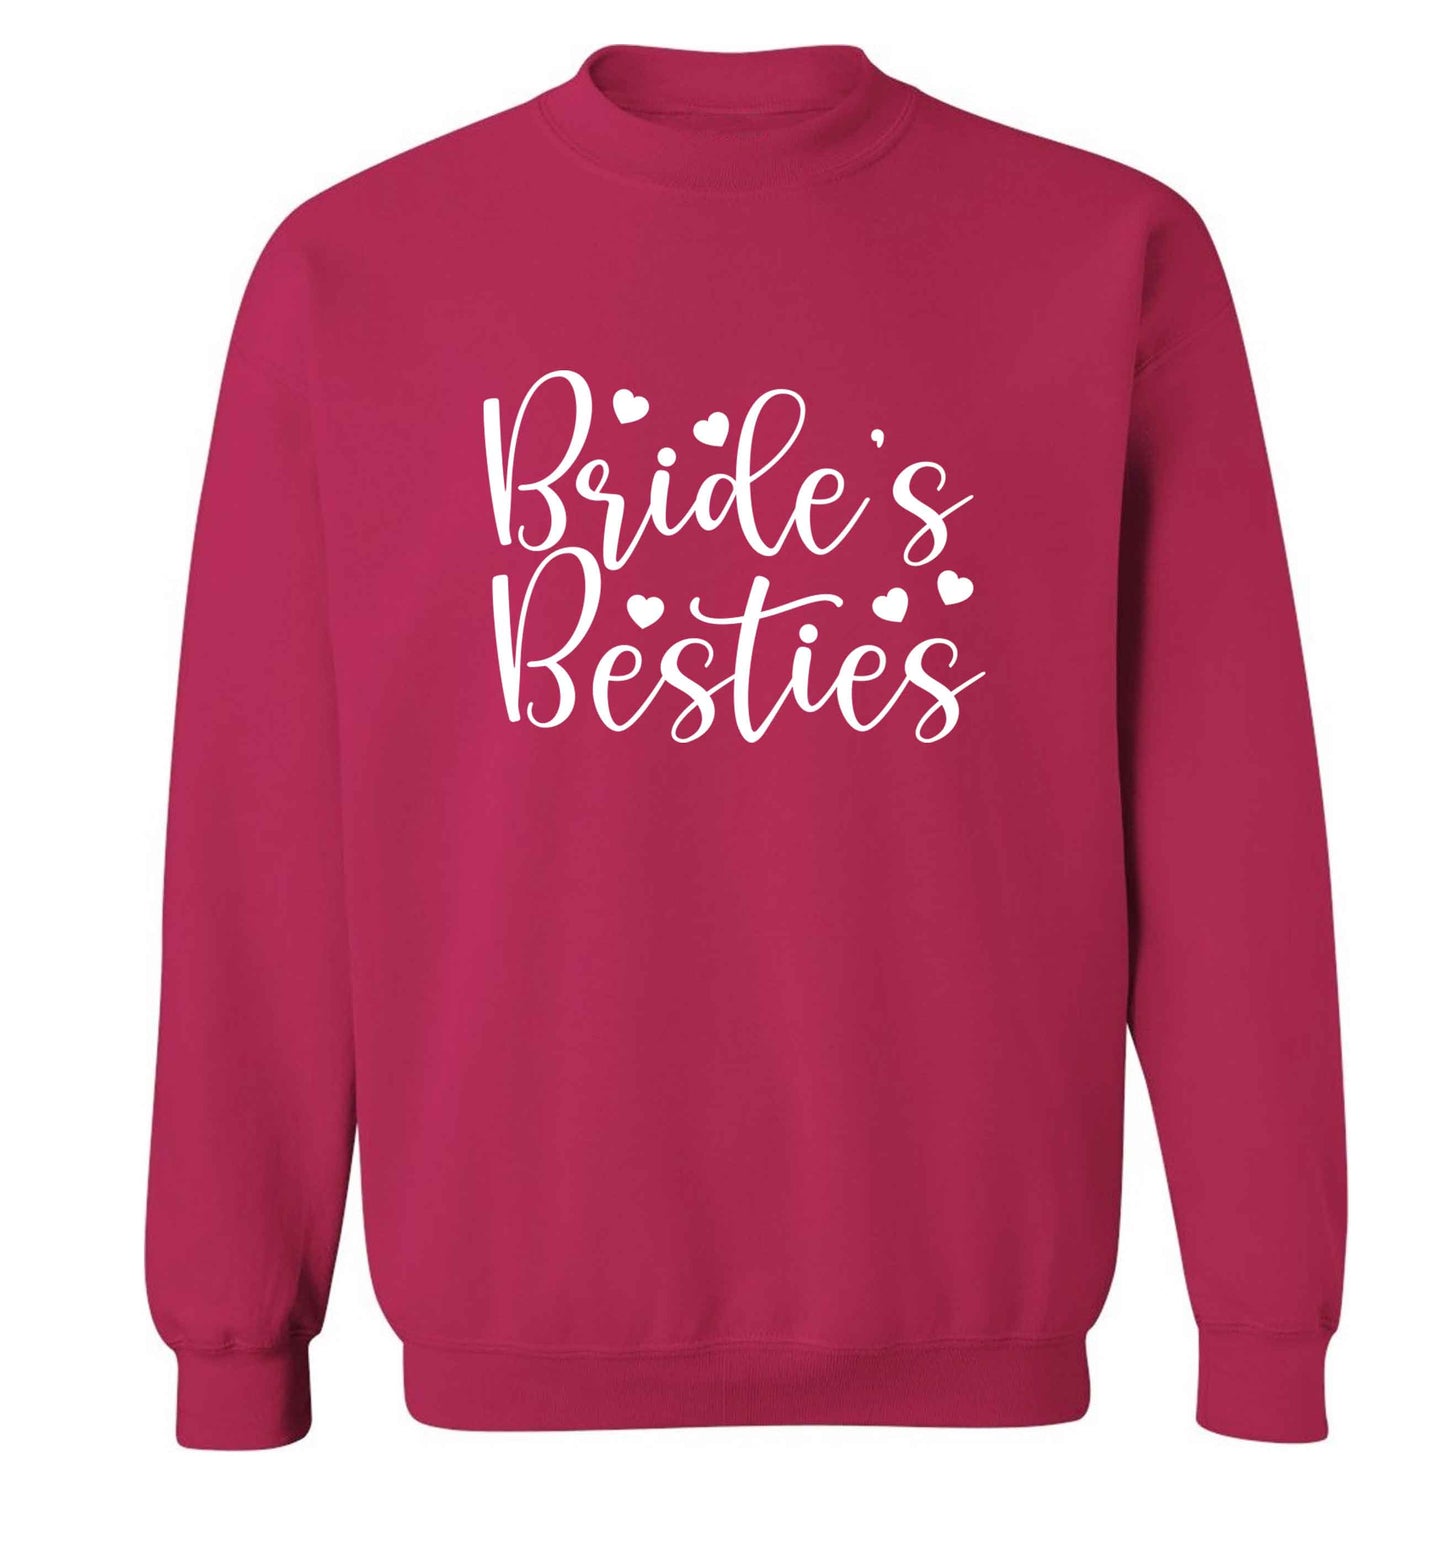 Brides besties adult's unisex pink sweater 2XL